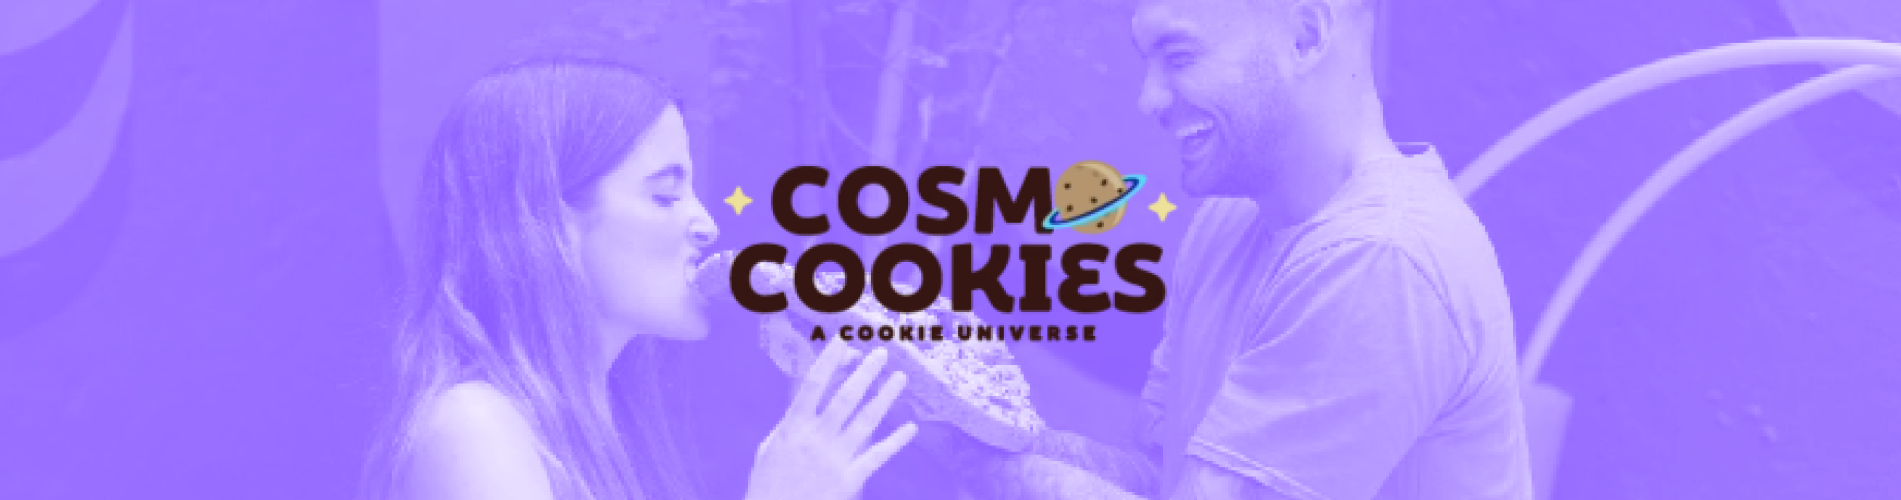 cosmo cookies